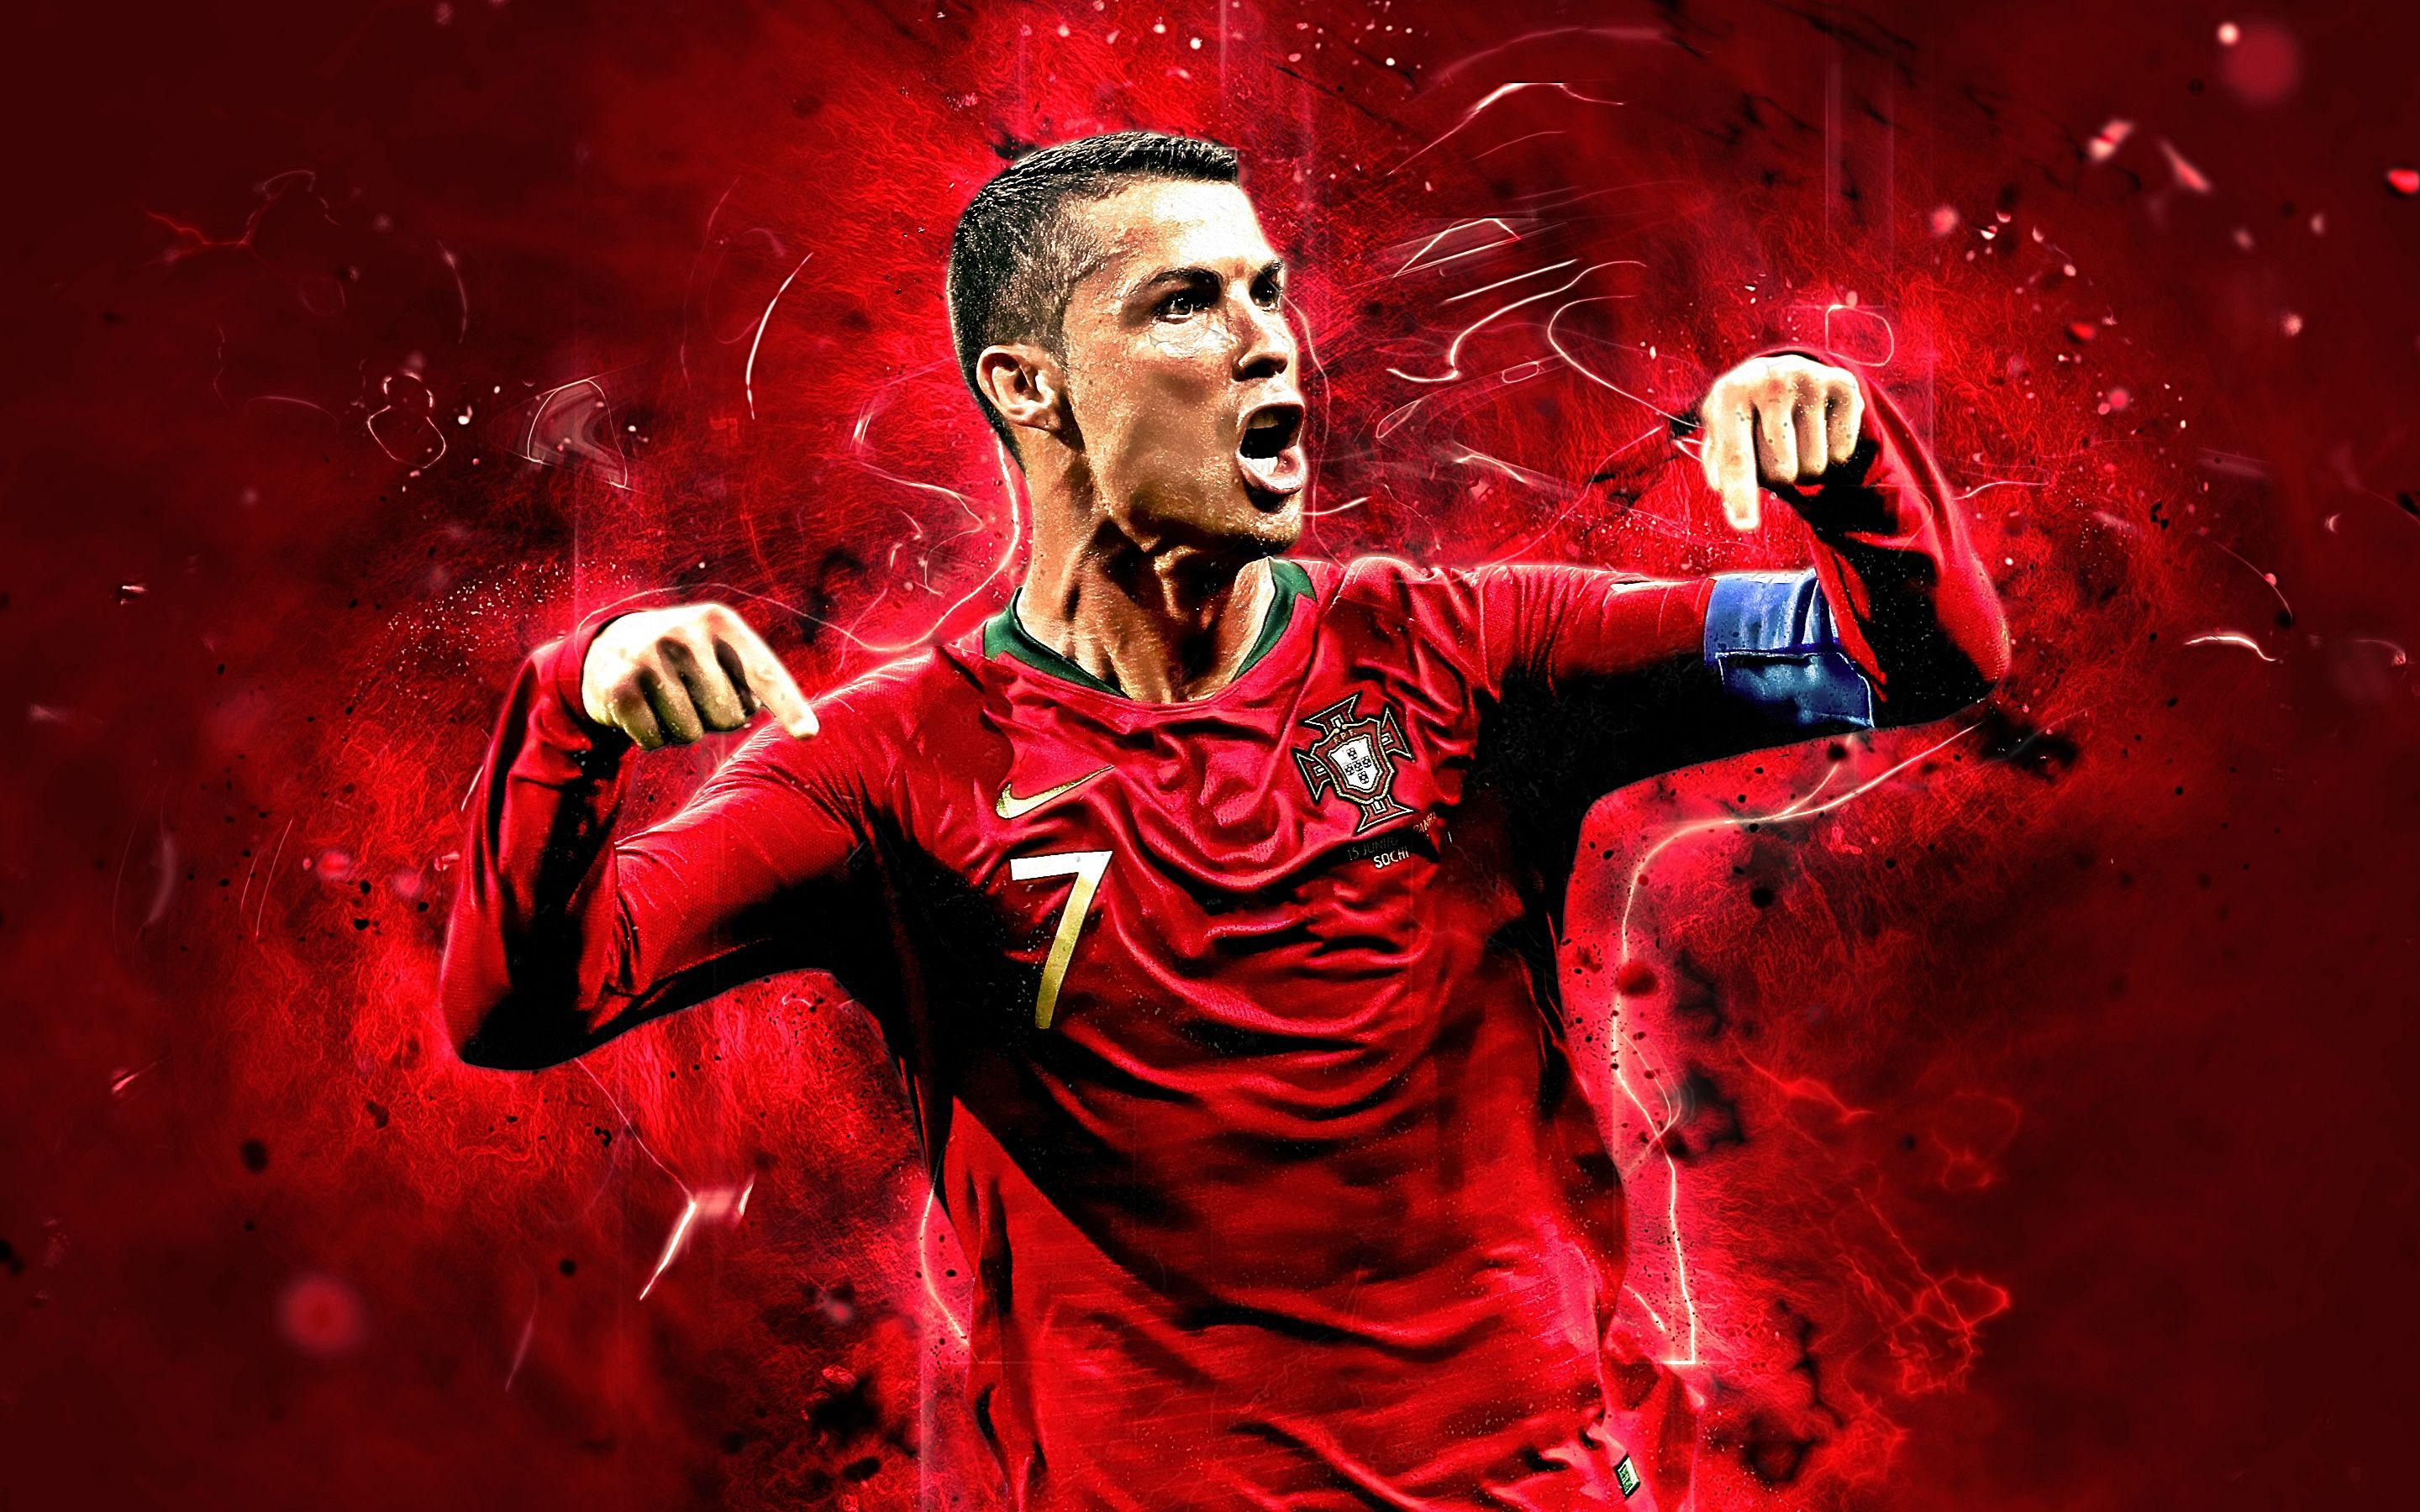 Cool Ronaldo Wallpapers - Top Free Cool Ronaldo Backgrounds